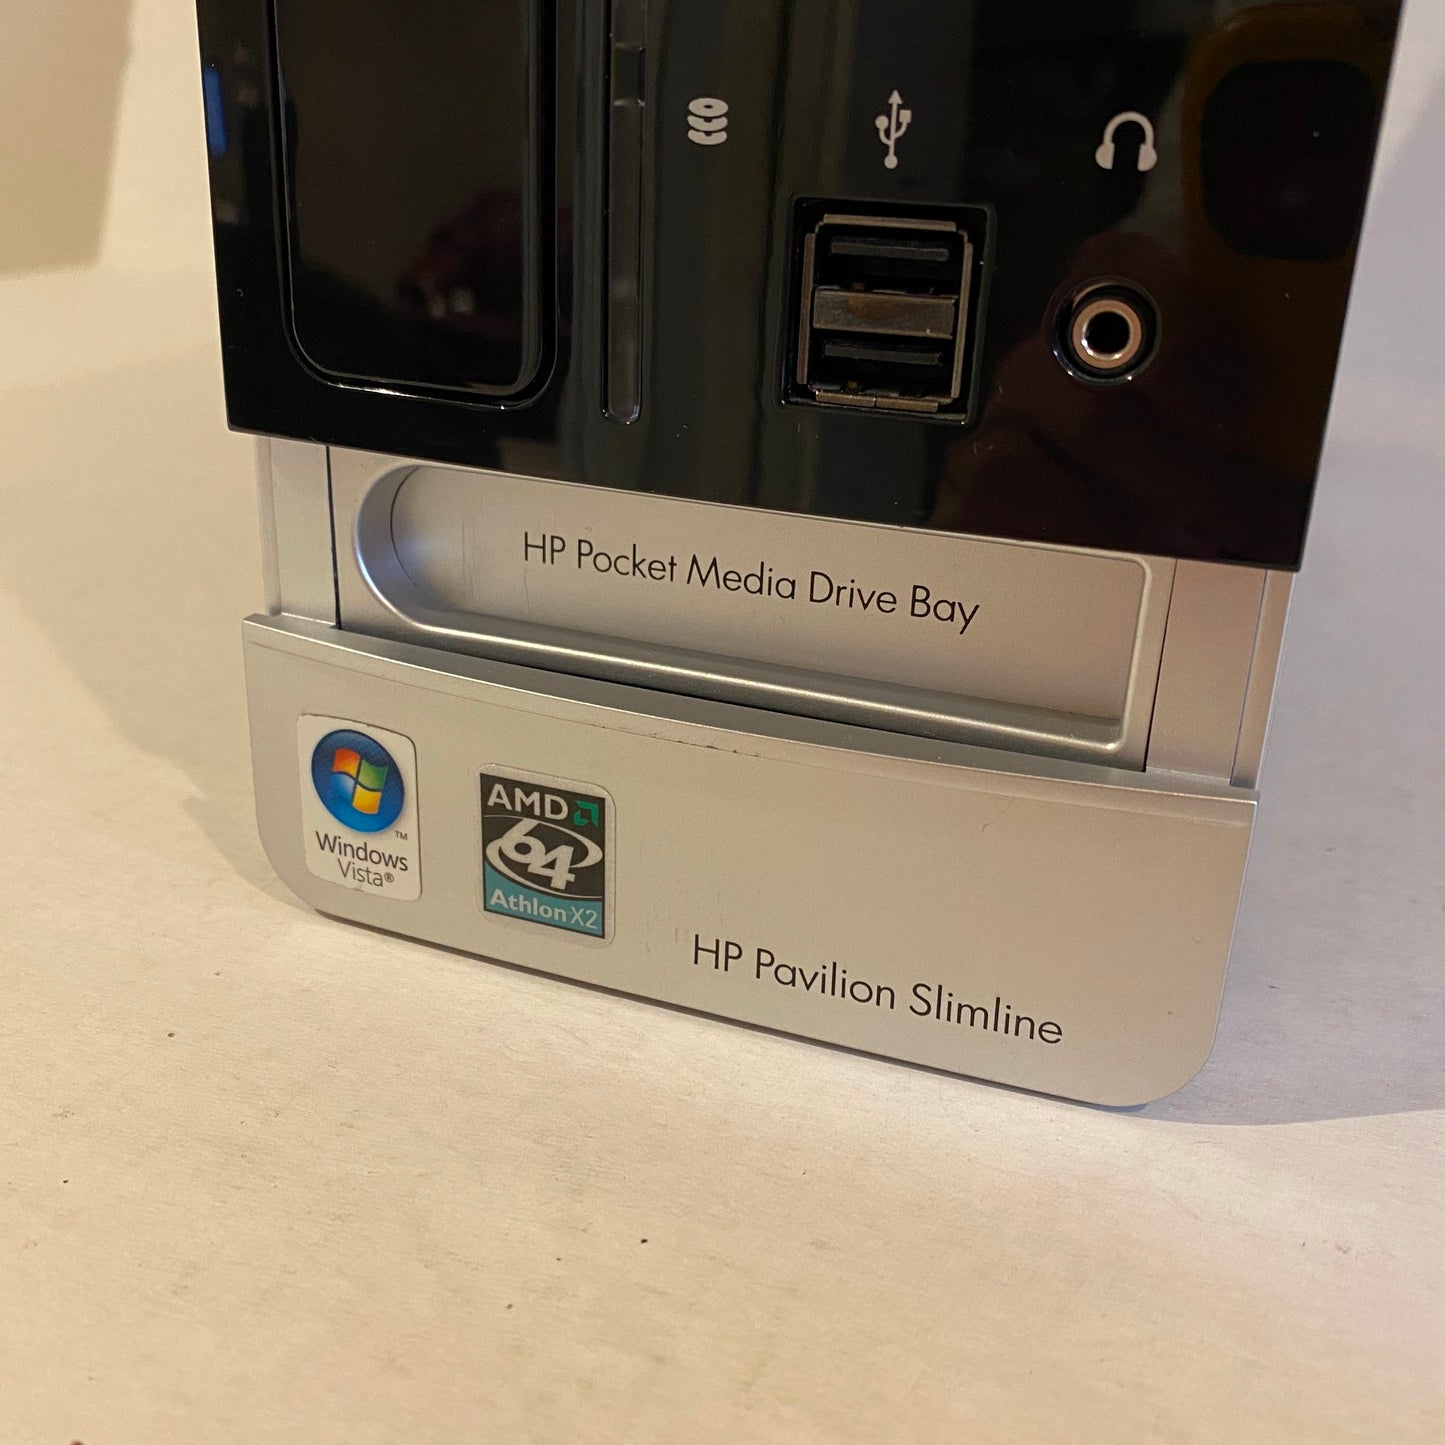 HP Pavilion Slimline Athlon 64 X2 5400+ 2.8 GHz - S3500f (No HDD)